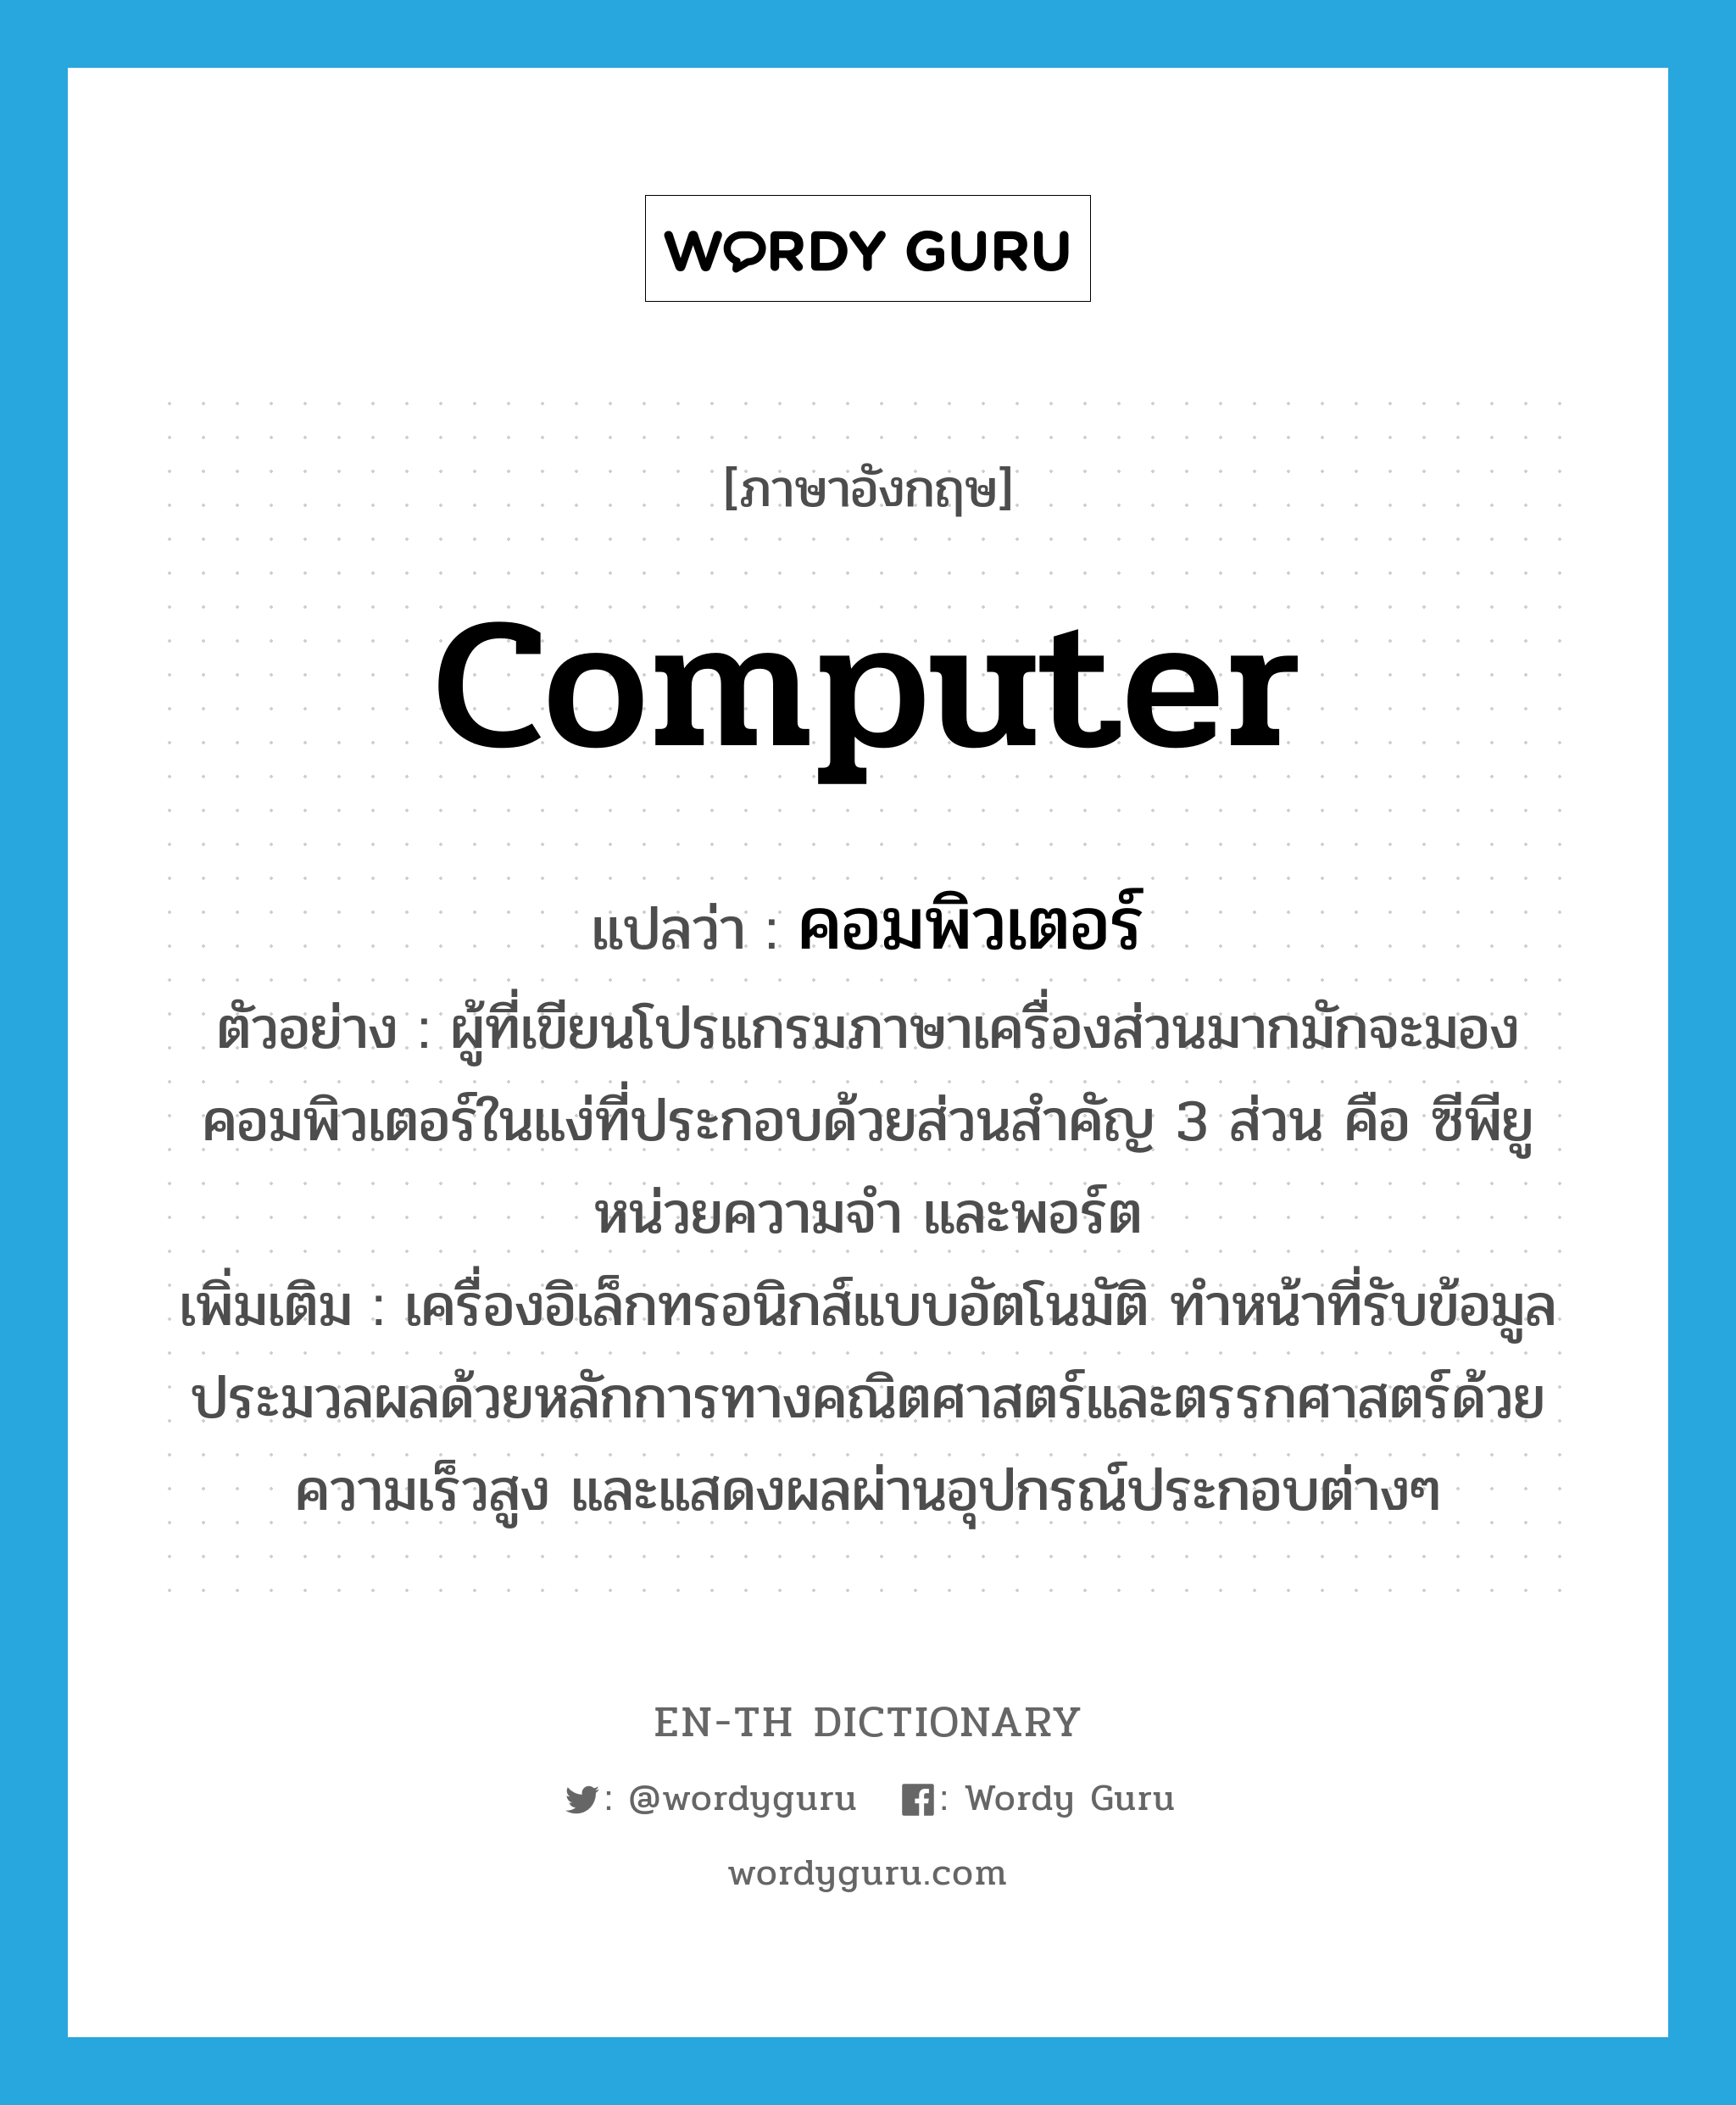 computer แปลว่า?, คำศัพท์ภาษาอังกฤษ computer แปลว่า คอมพิวเตอร์ ประเภท N ตัวอย่าง ผู้ที่เขียนโปรแกรมภาษาเครื่องส่วนมากมักจะมองคอมพิวเตอร์ในแง่ที่ประกอบด้วยส่วนสำคัญ 3 ส่วน คือ ซีพียู หน่วยความจำ และพอร์ต เพิ่มเติม เครื่องอิเล็กทรอนิกส์แบบอัตโนมัติ ทำหน้าที่รับข้อมูล ประมวลผลด้วยหลักการทางคณิตศาสตร์และตรรกศาสตร์ด้วยความเร็วสูง และแสดงผลผ่านอุปกรณ์ประกอบต่างๆ หมวด N